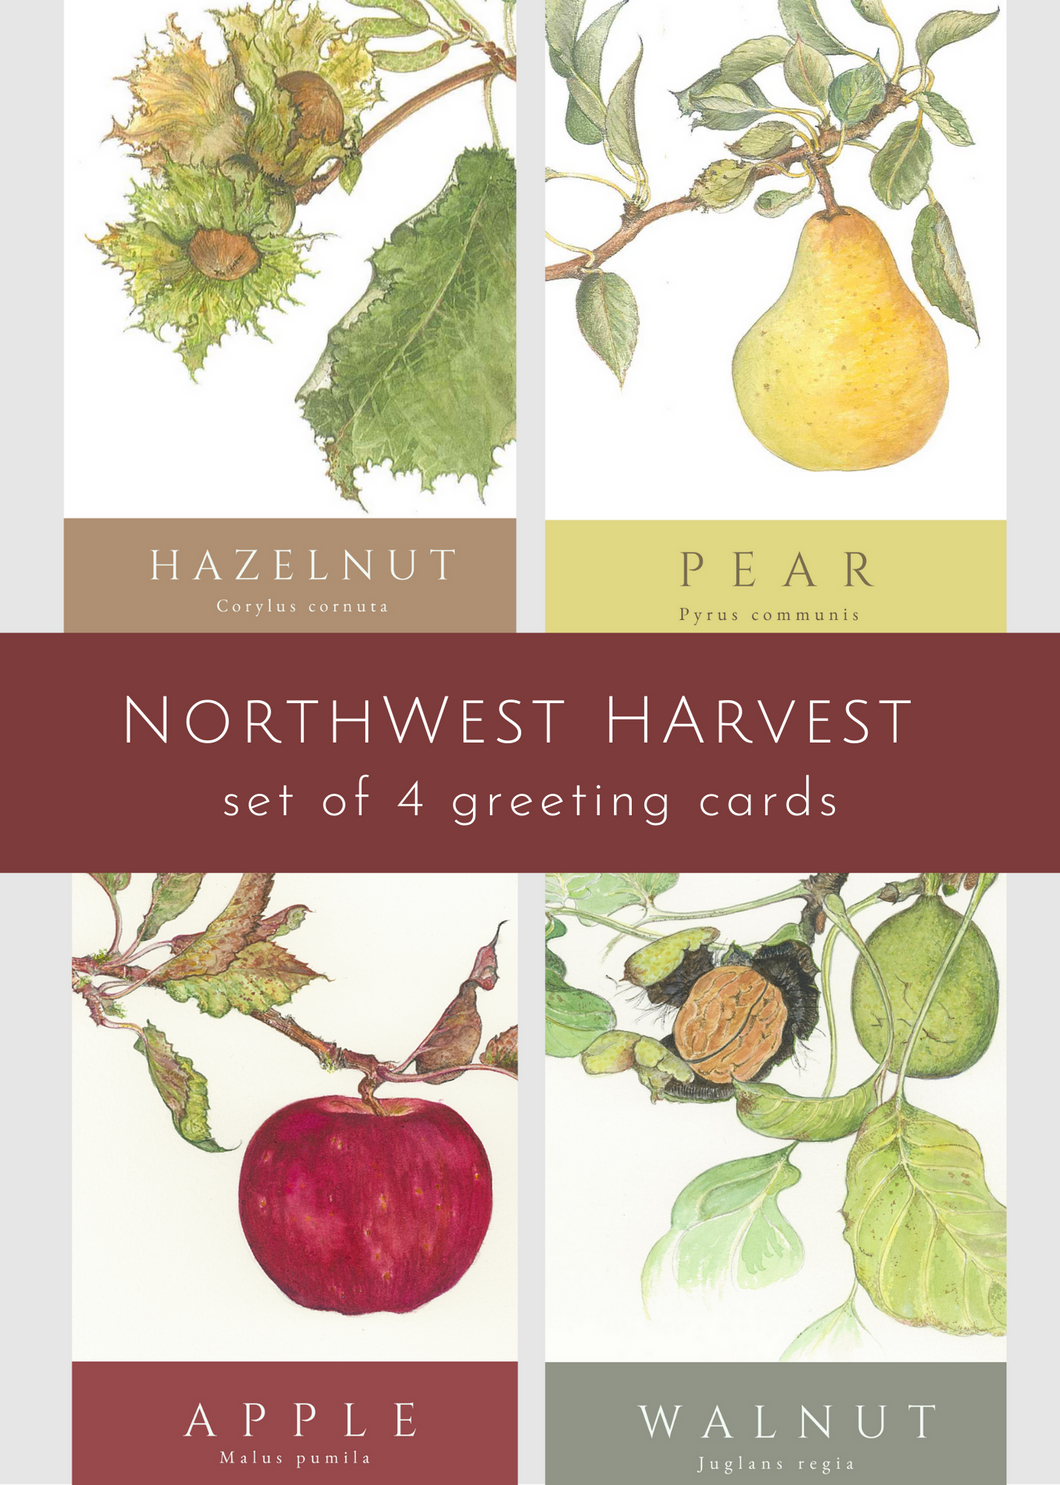 Northwest Harvest—set of 4